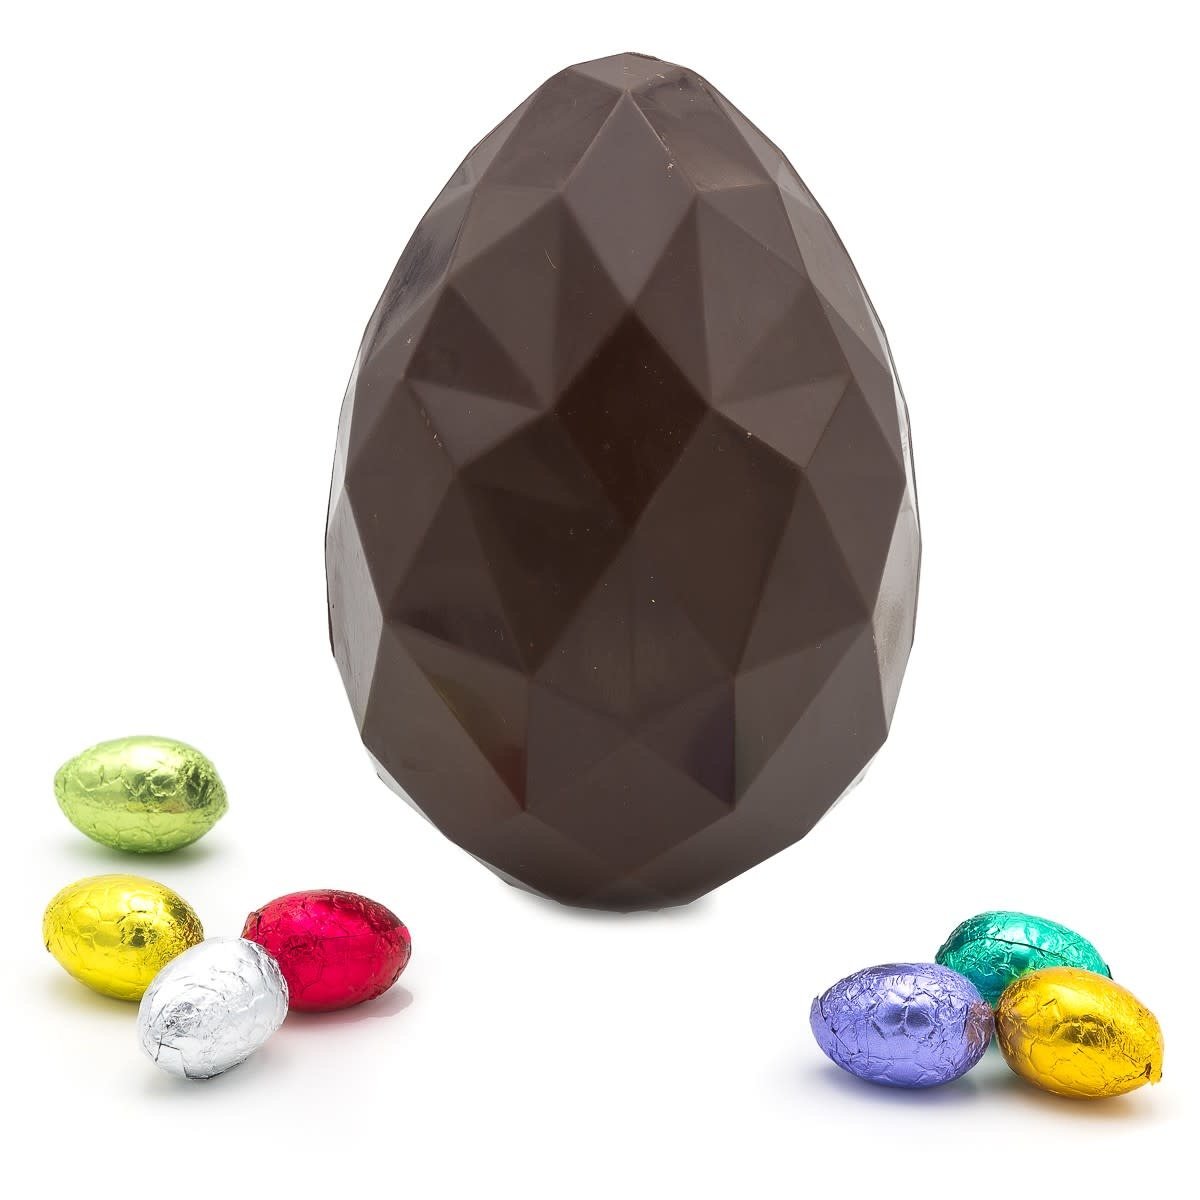 Small diamond egg (dark) 180 Grs